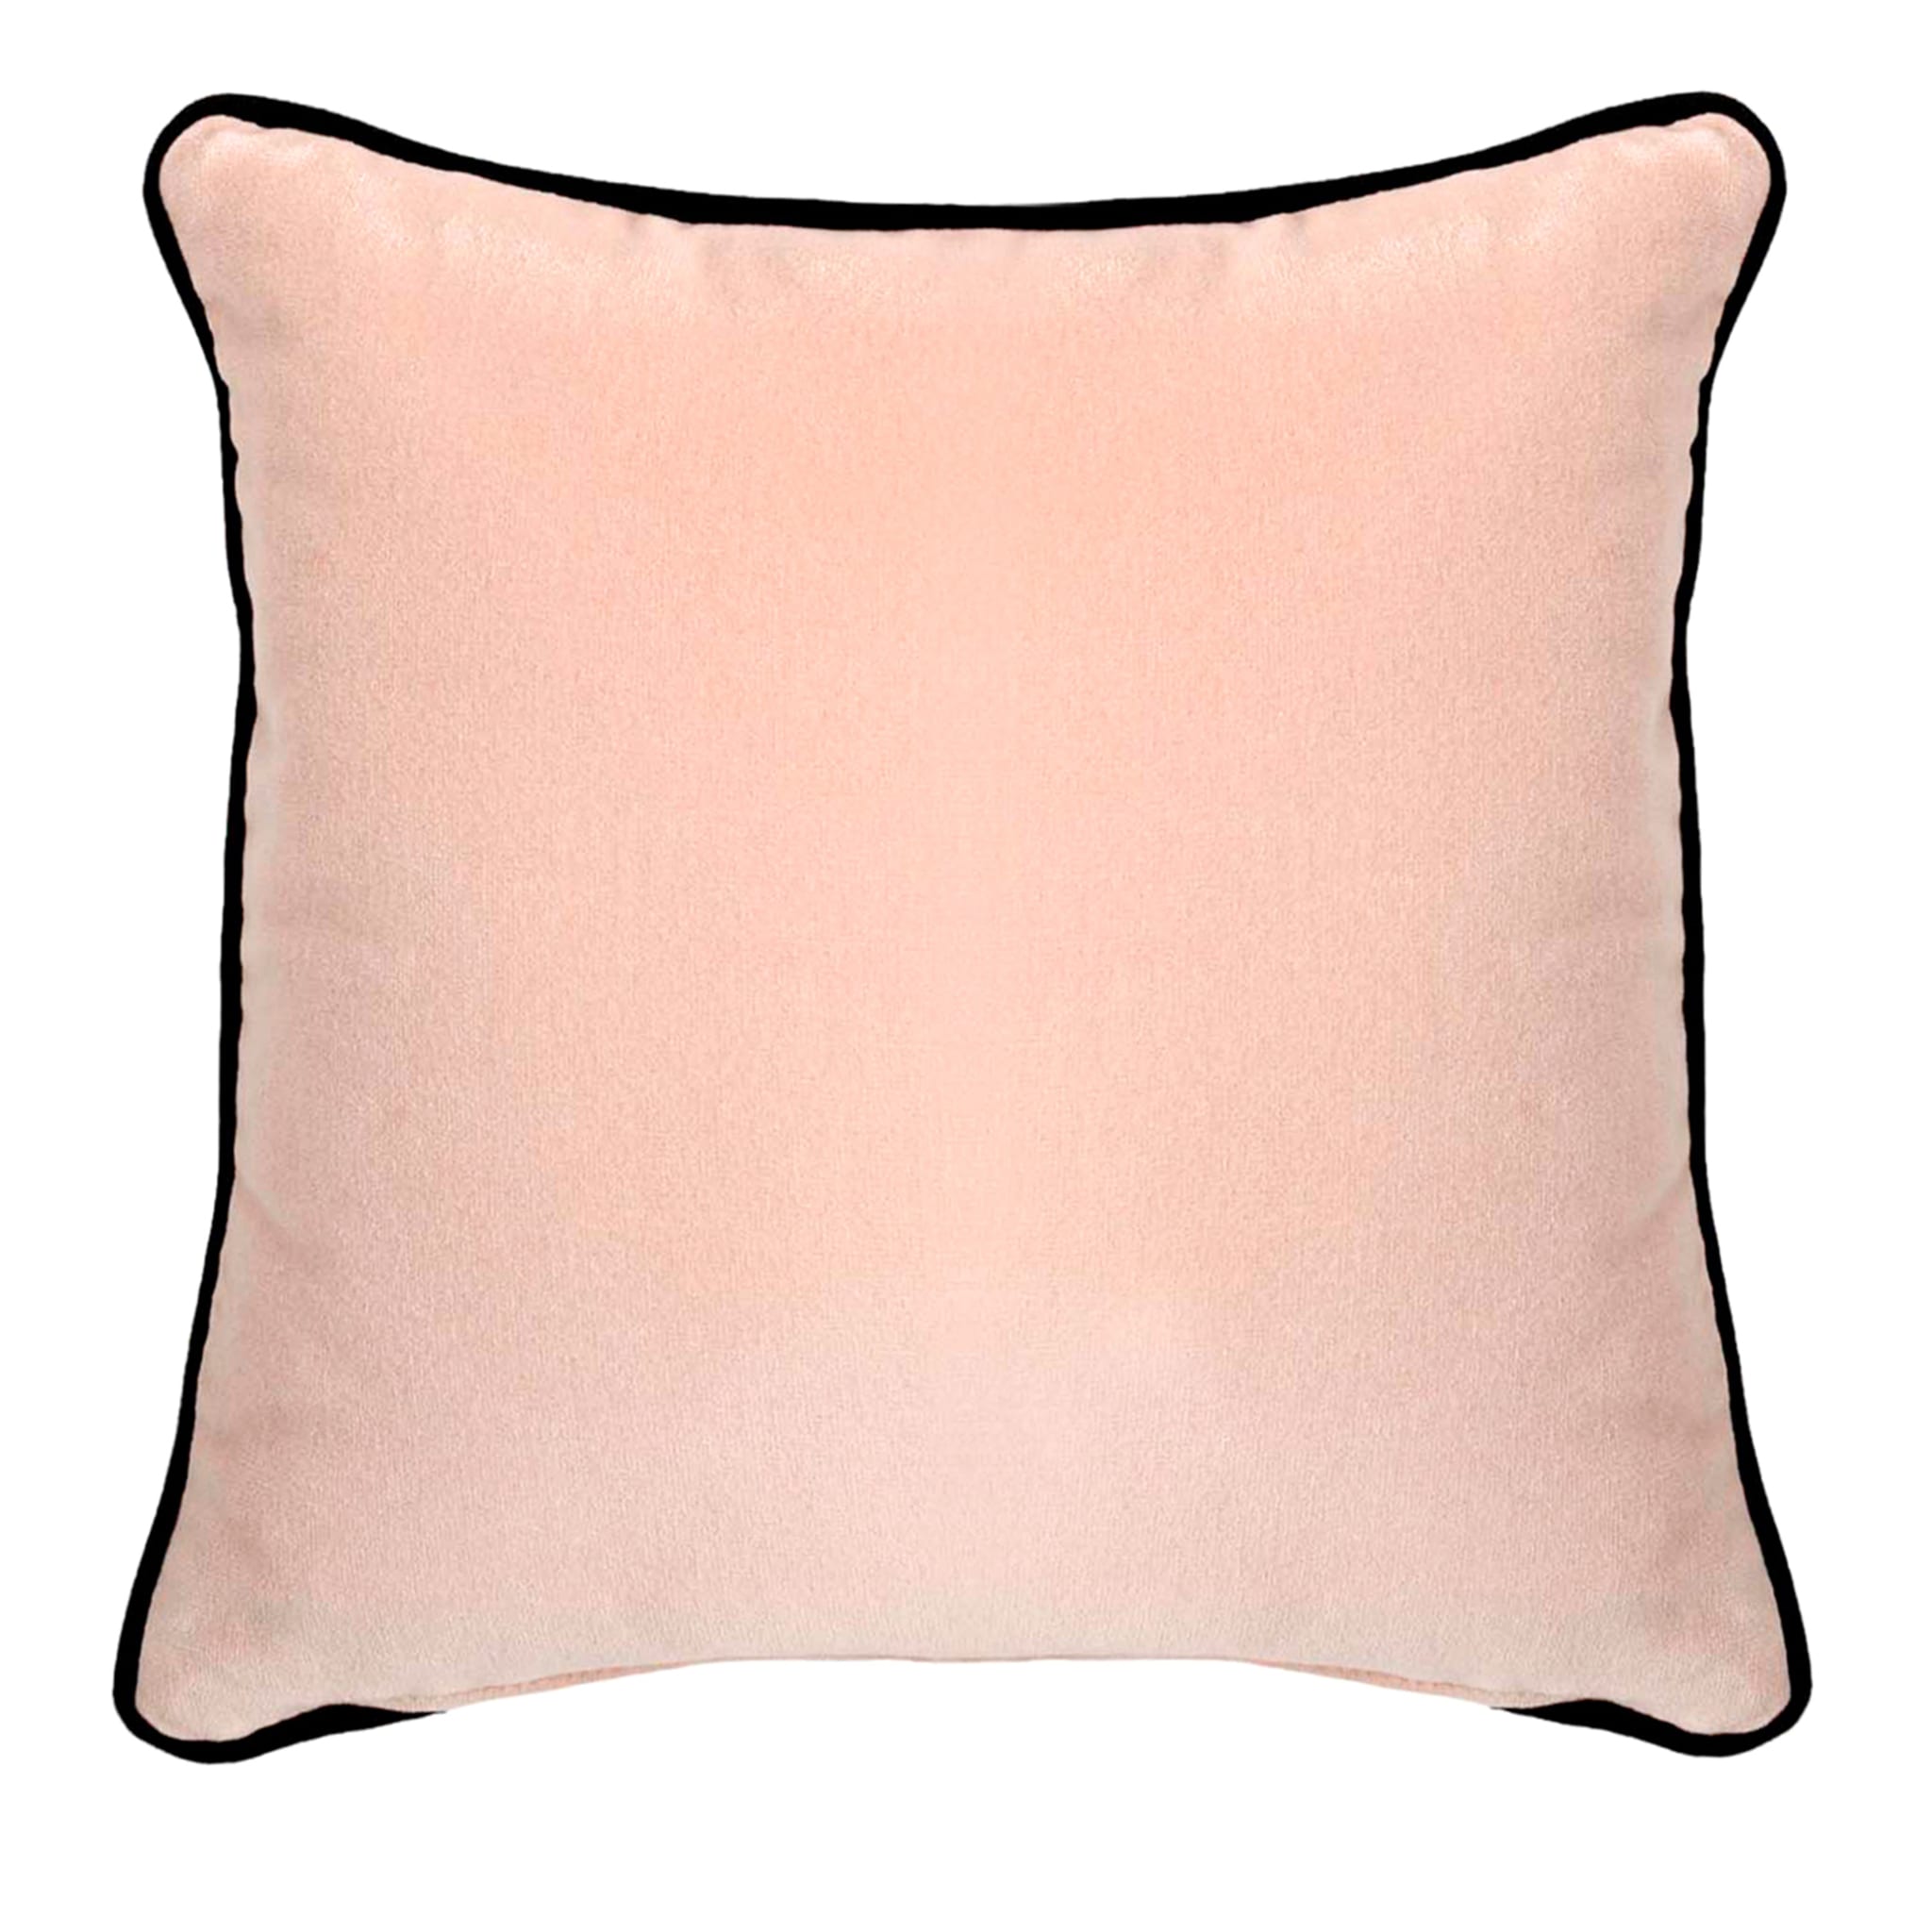 Carrè Cushion in Micro-Patterned jacquard fabric - Alternative view 1